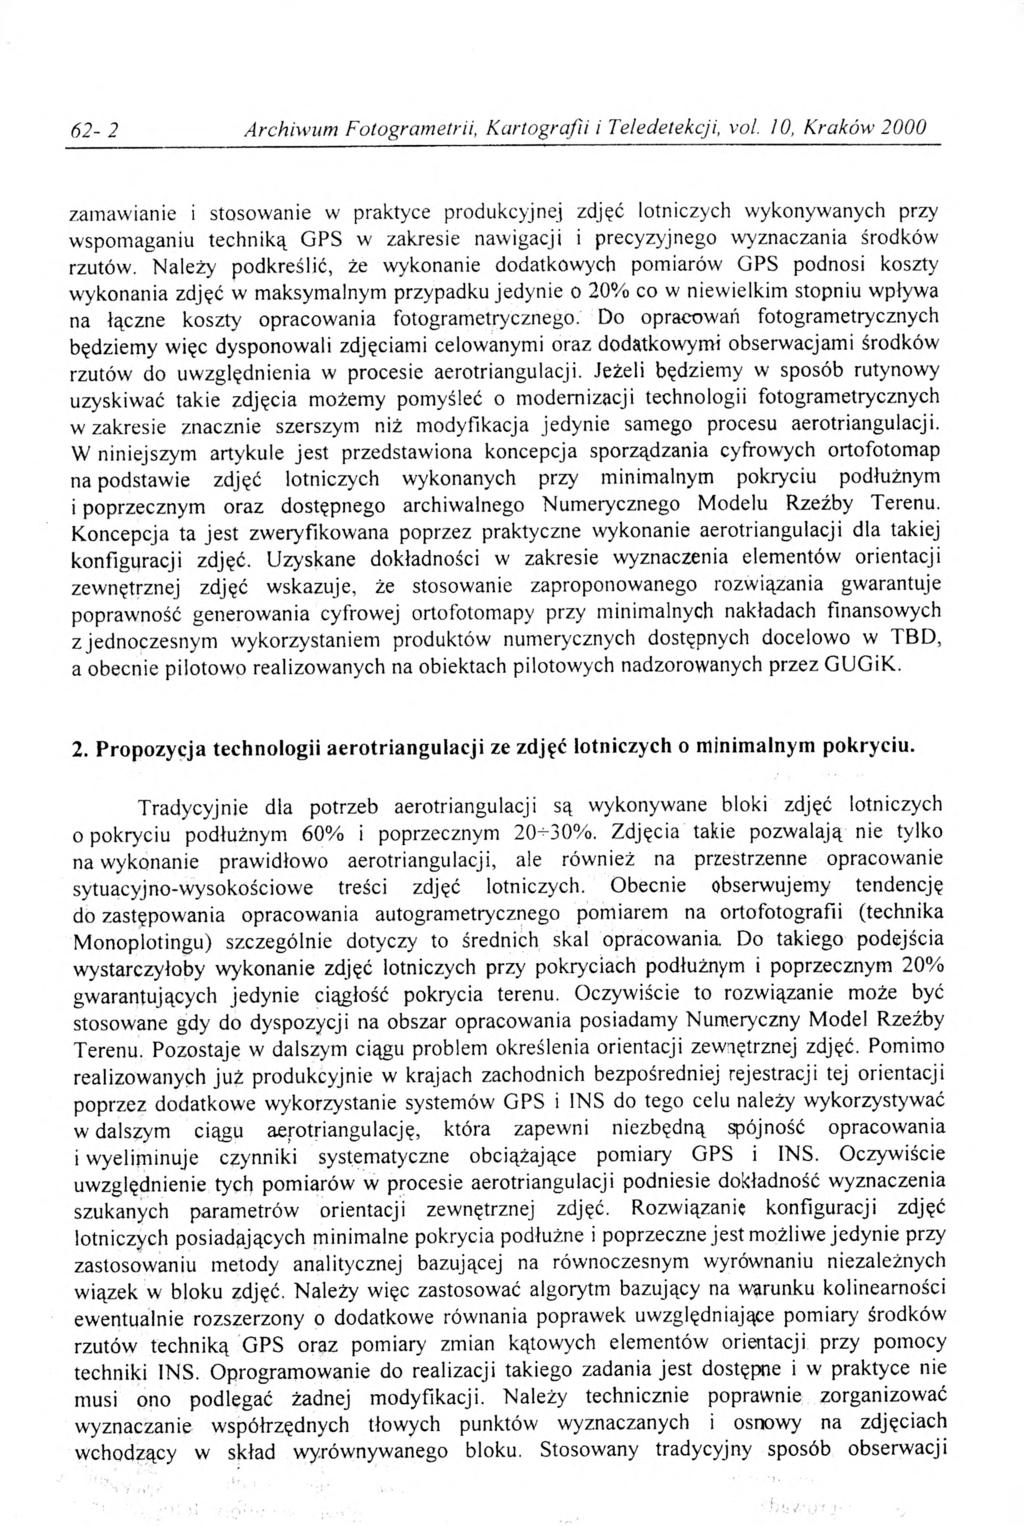 62-2 Archiwum Fotogrametrii, Kartografii i Teledetekcji, vol.